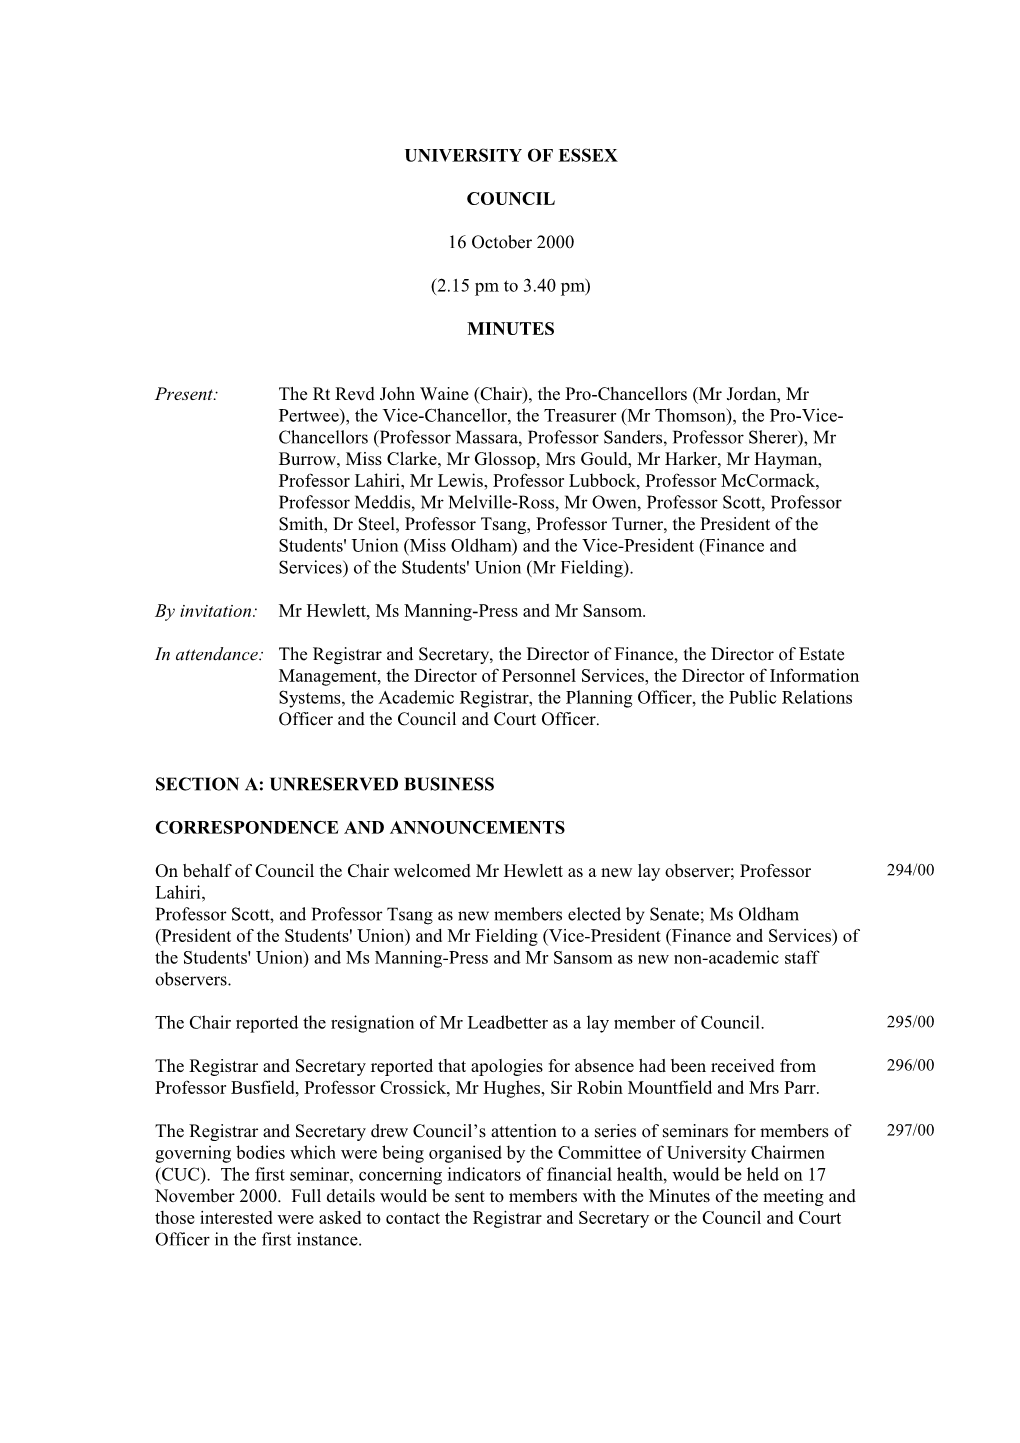 Council Minutes October 2000- University of Essex